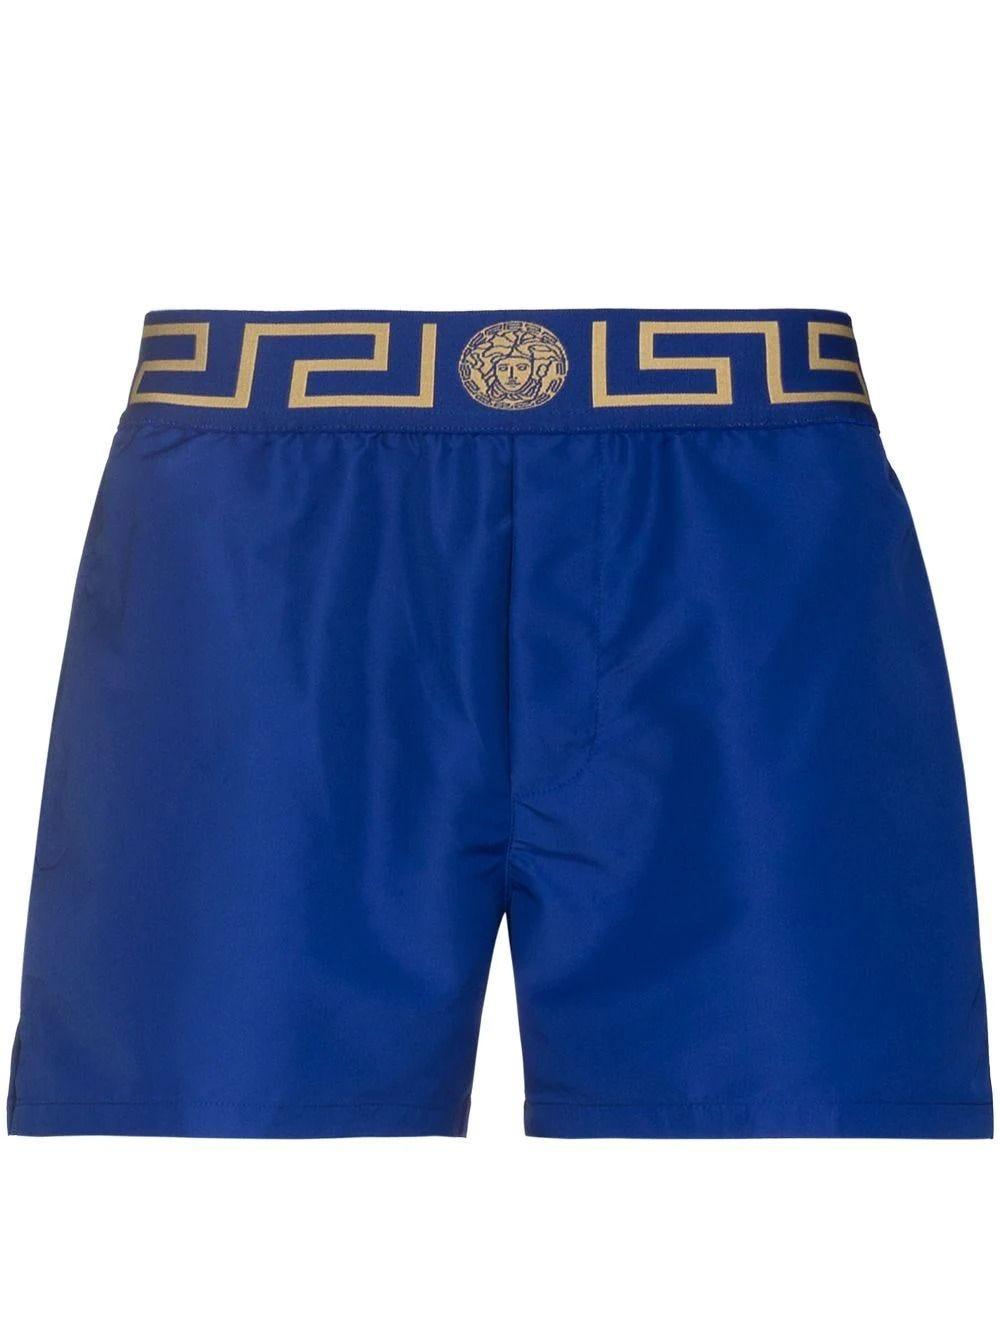 Versace Greca Print Blue Swim Shorts for Men | Lyst